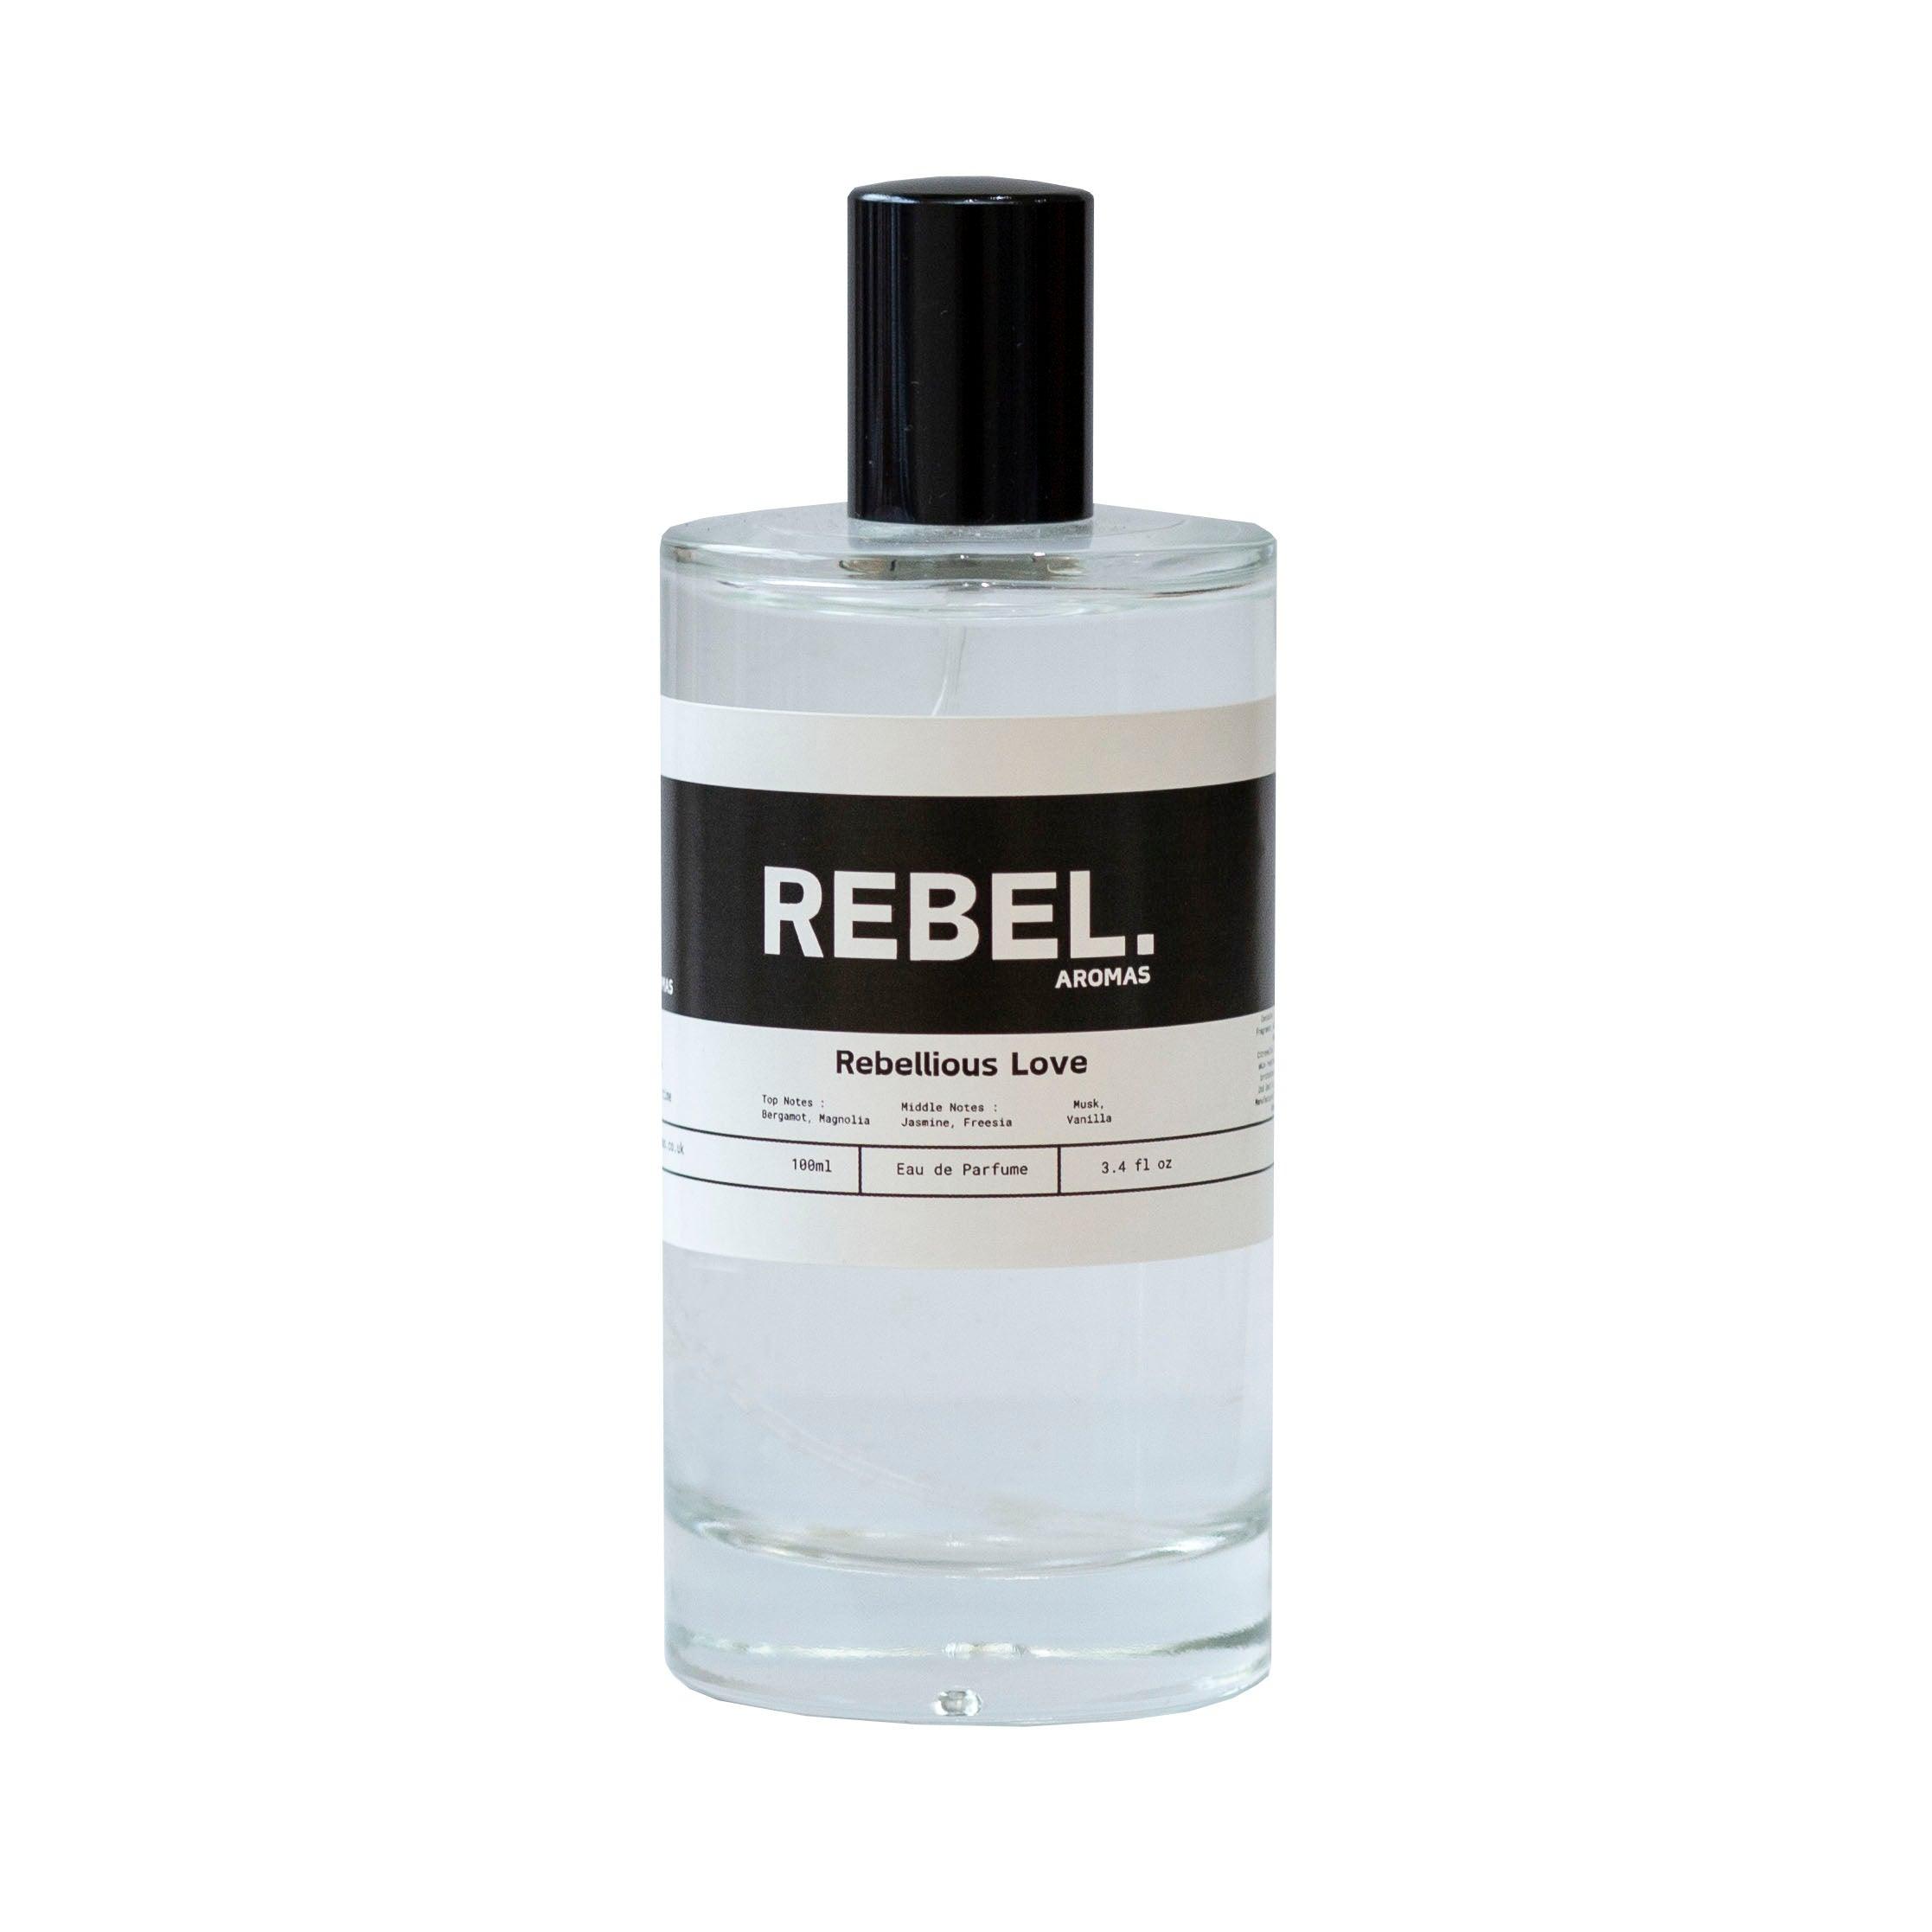 Rebellious Love - Rebel Aromas